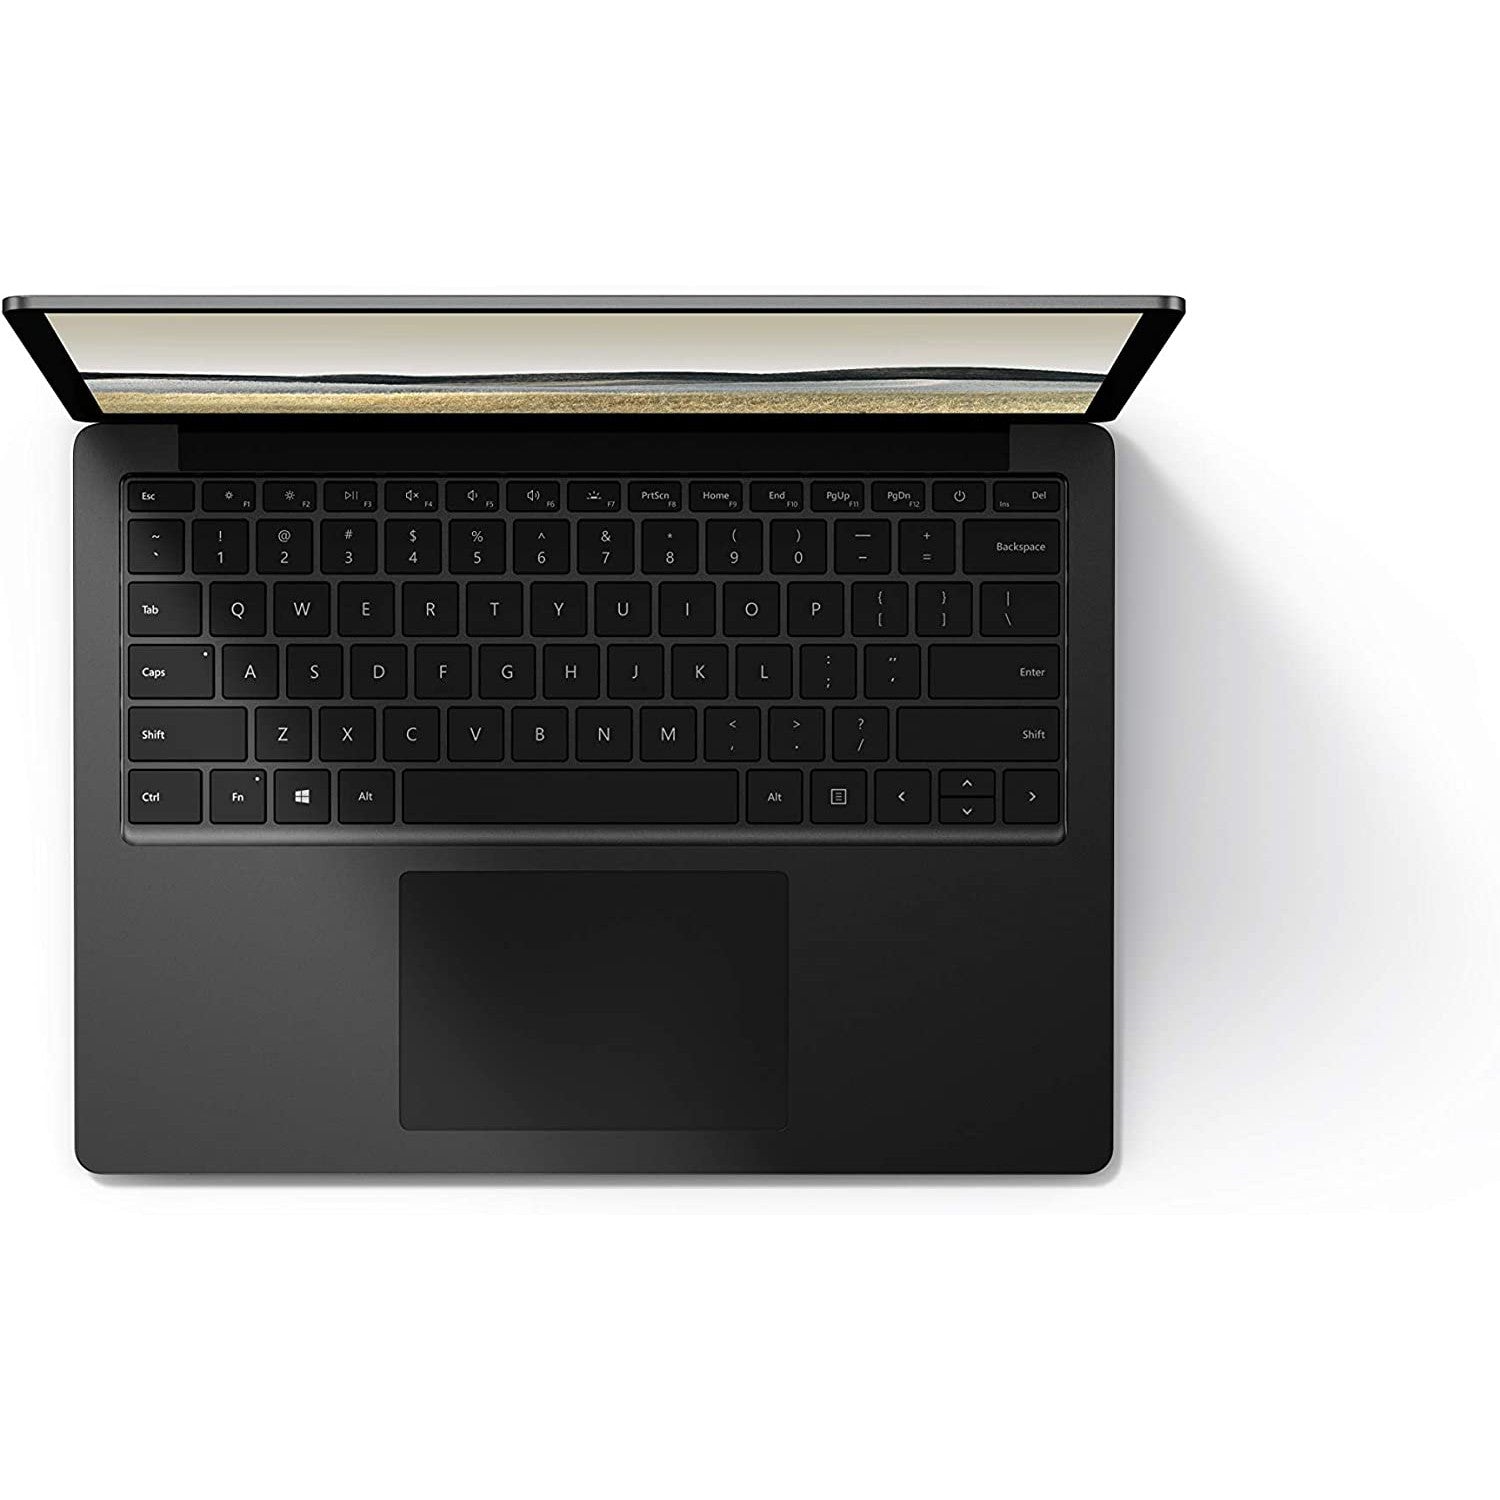 Microsoft Surface Laptop 3 Intel Core i7 16GB RAM 256GB SSD, 13.5" - Black